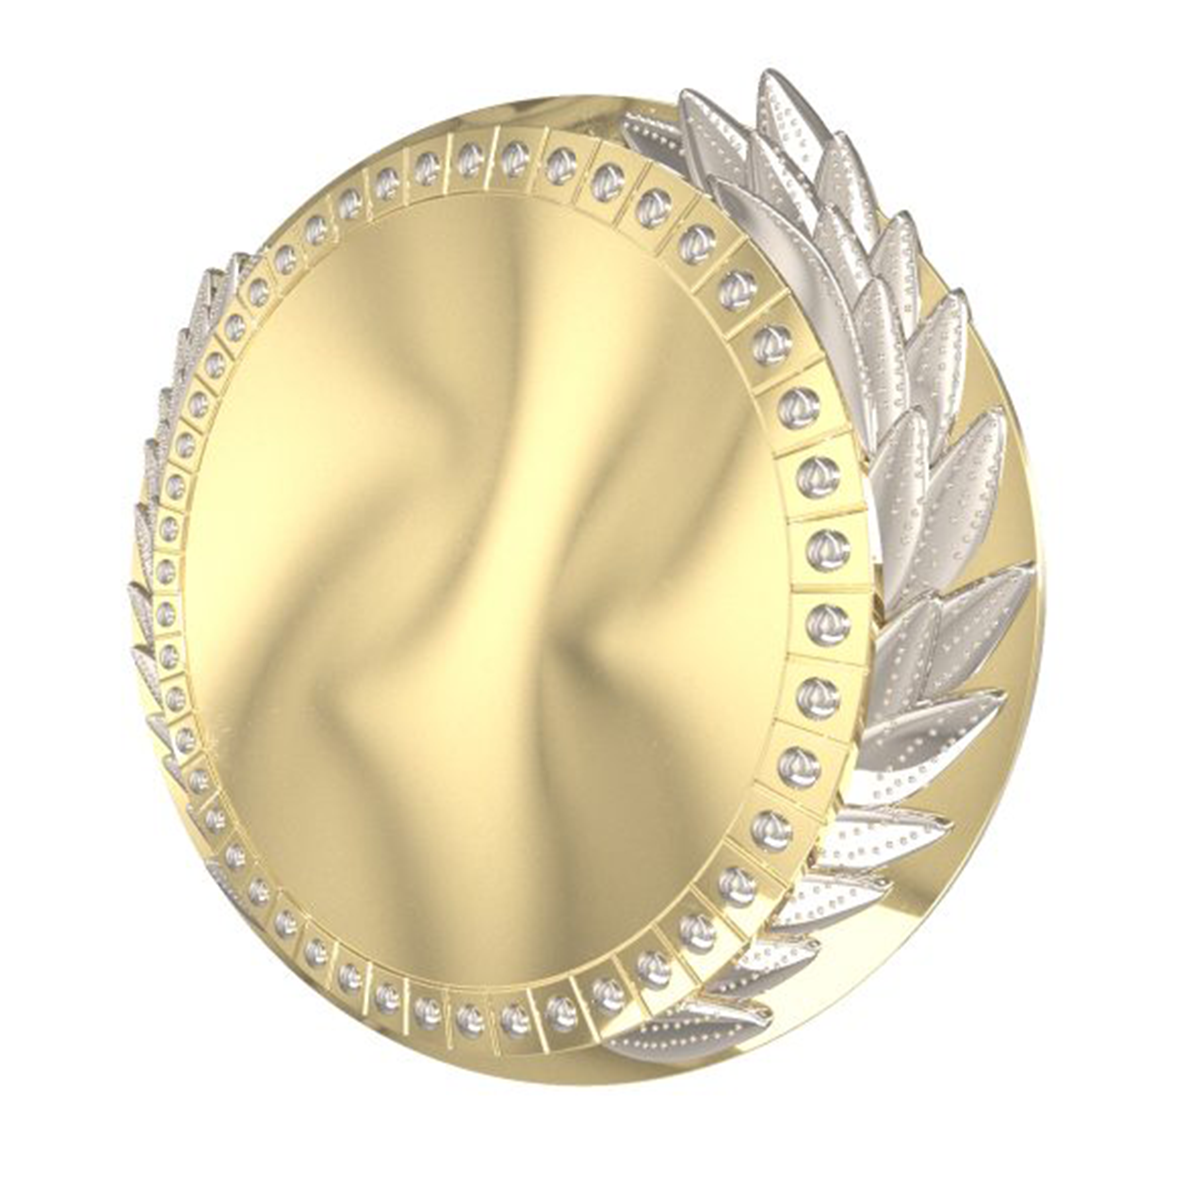 Presidential Champ Chain Medal